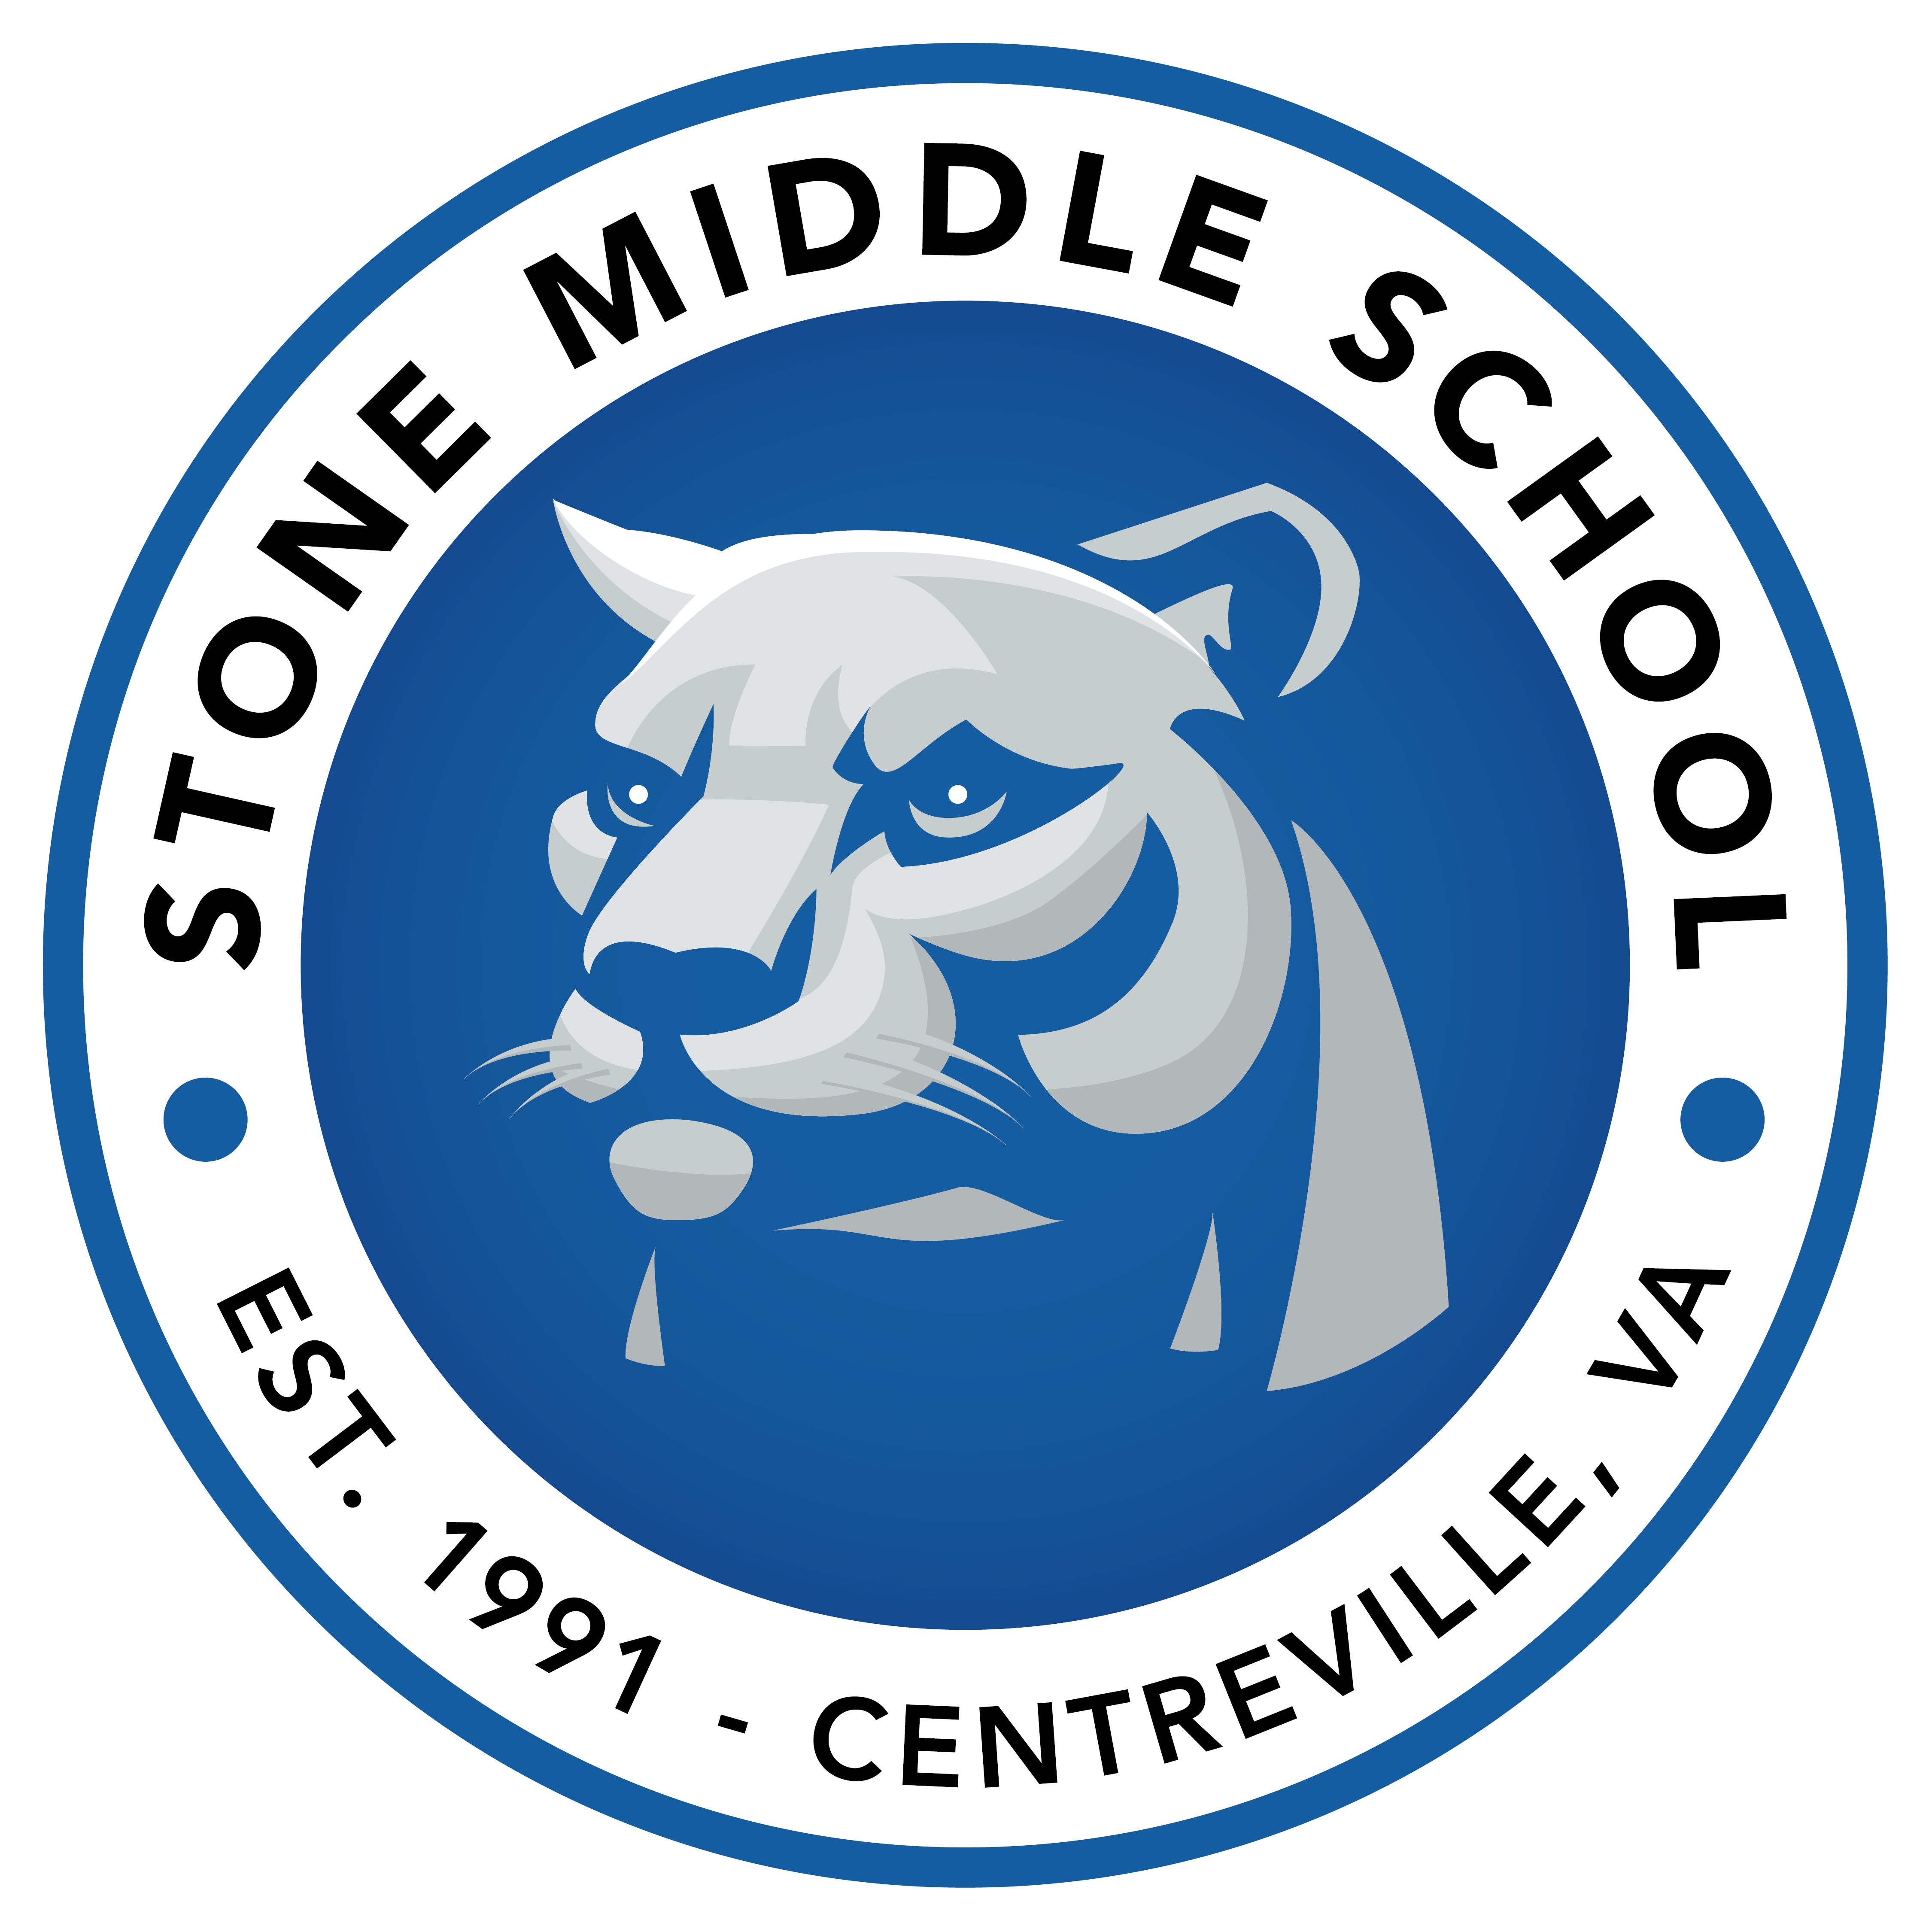 Stone Middle School